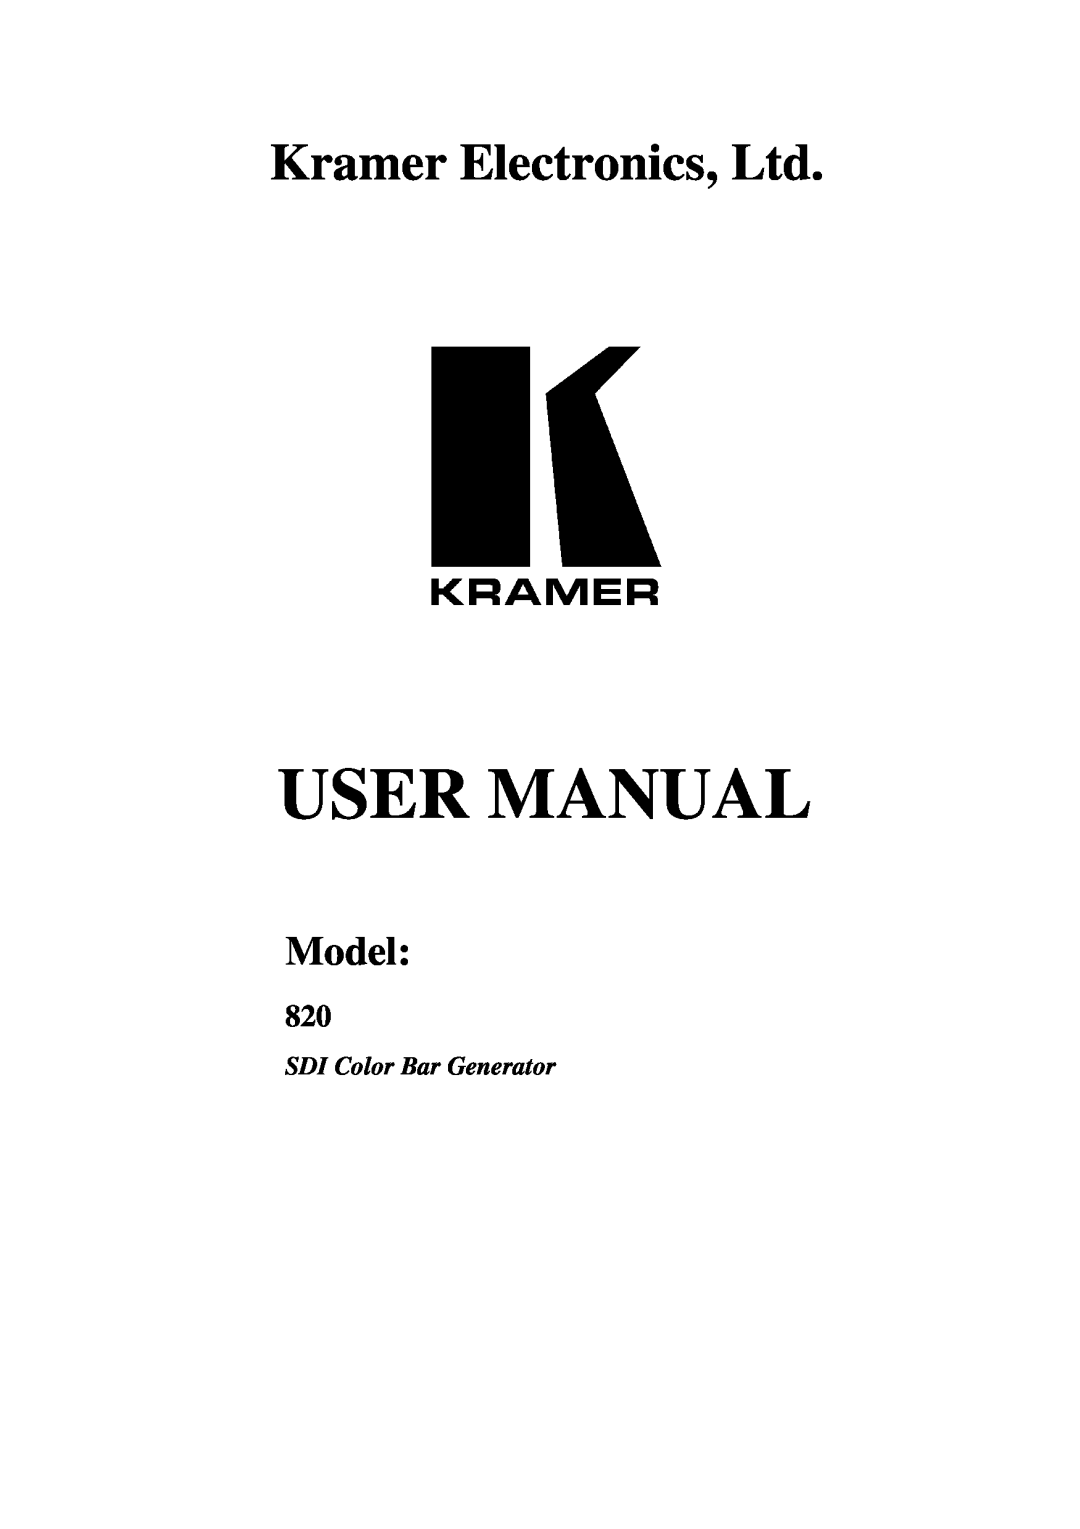 Kramer Electronics 820 user manual User Manual, Kramer Electronics, Ltd, Model, SDI Color Bar Generator 